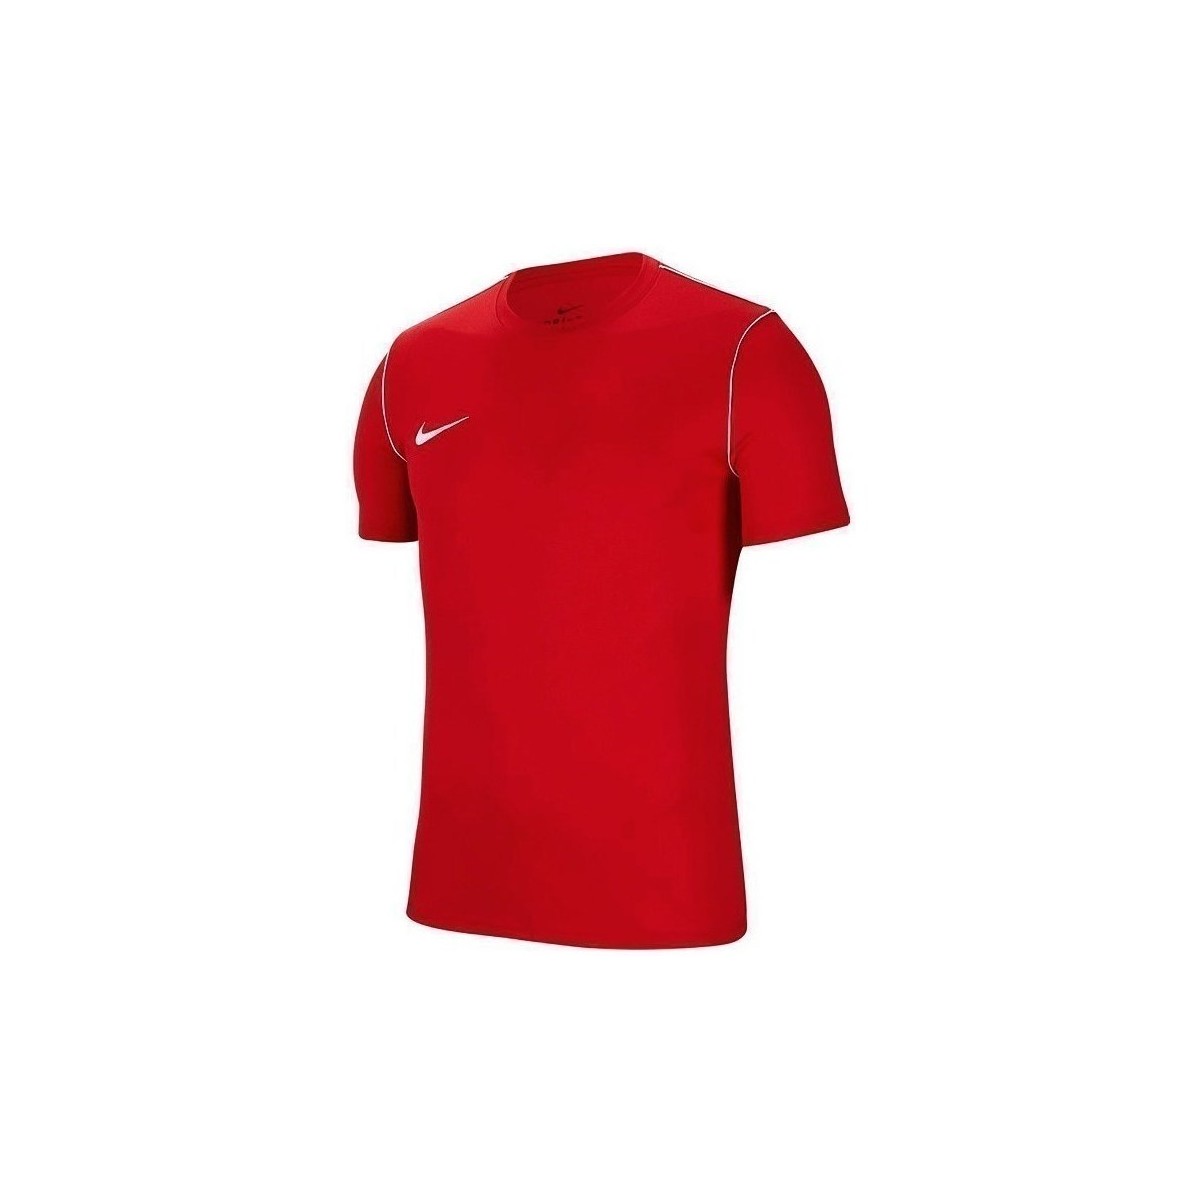 textil Dreng T-shirts m. korte ærmer Nike JR Park 20 Rød